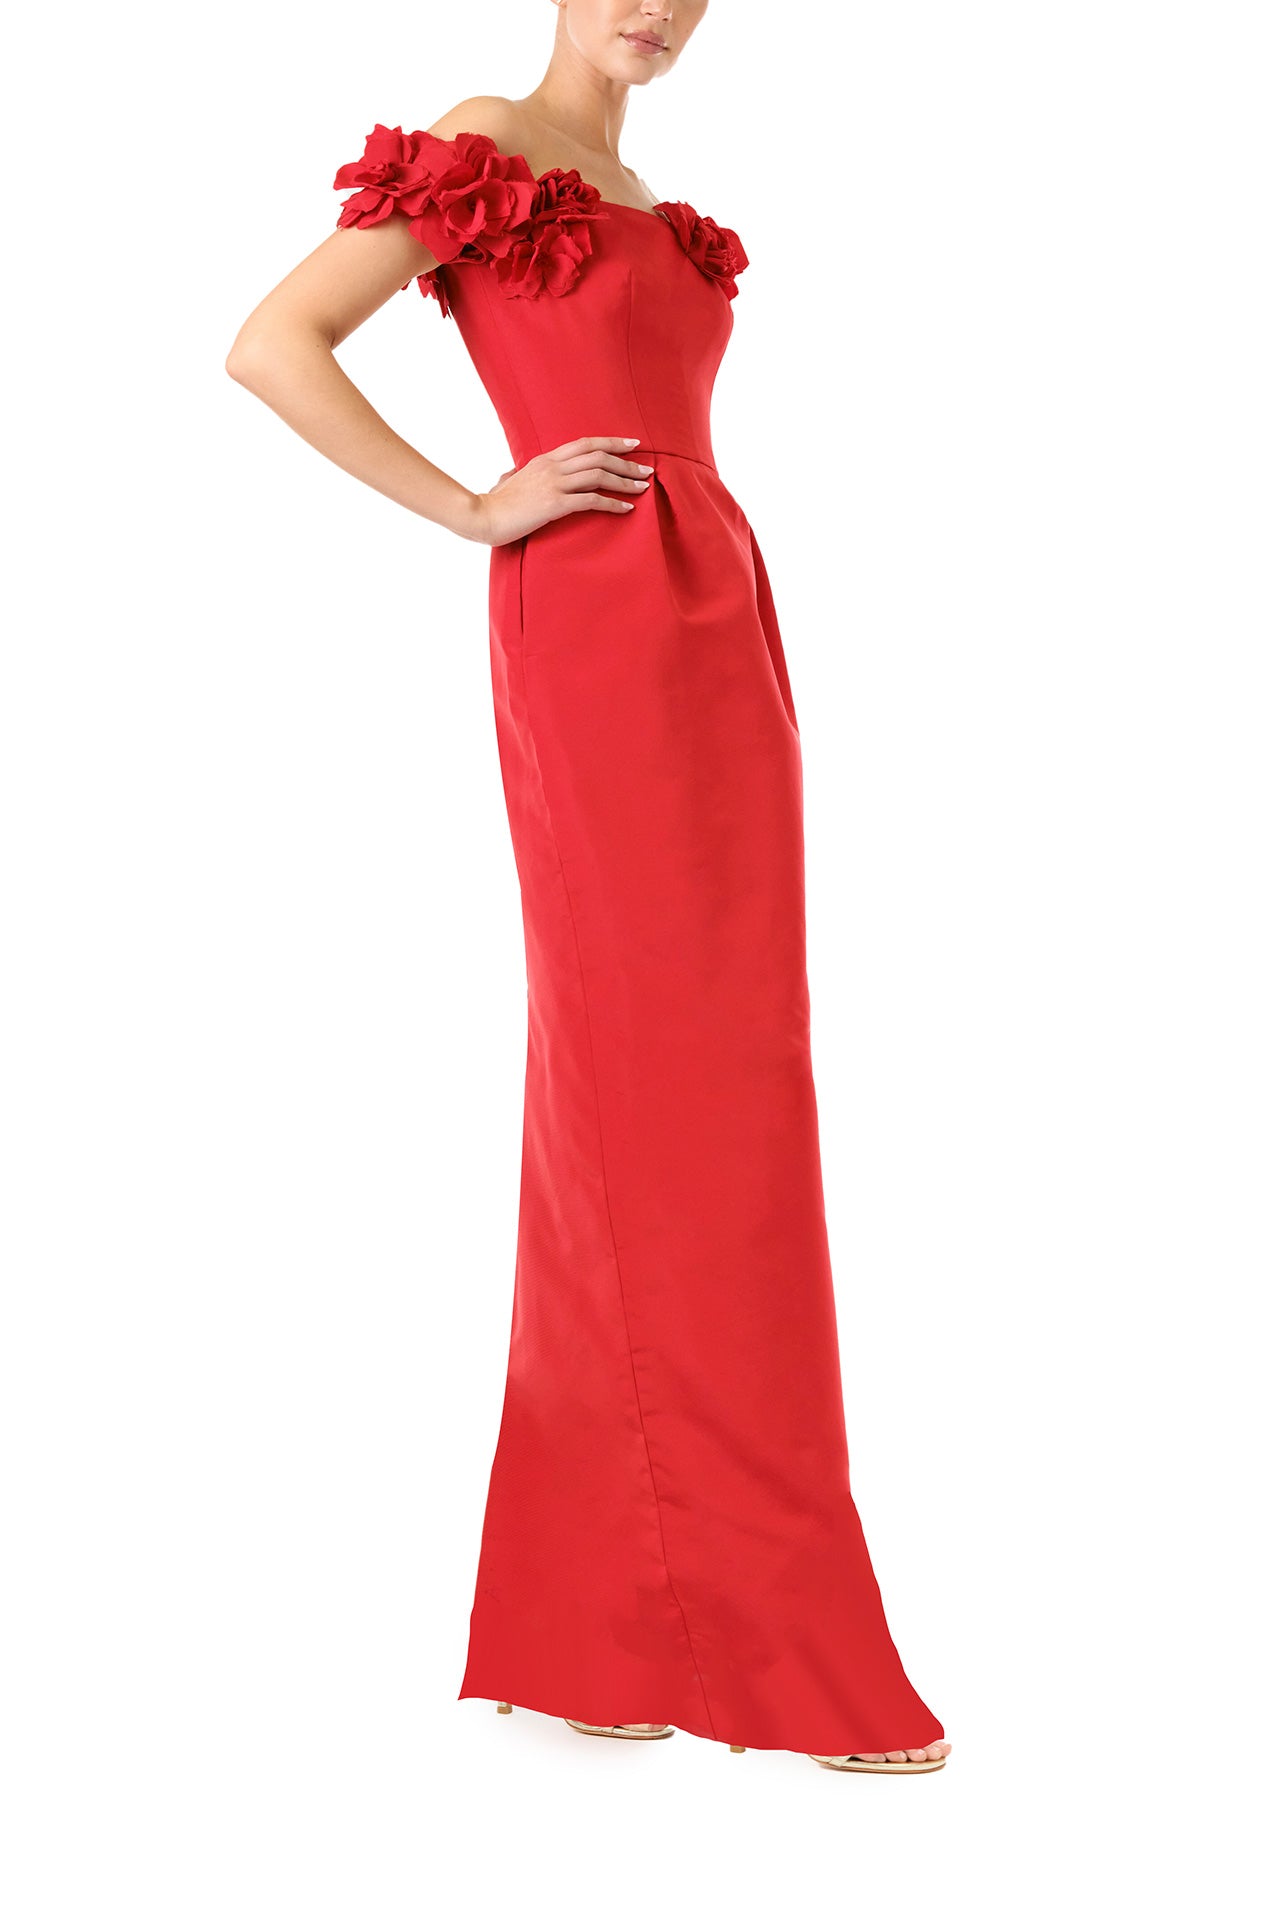 Monique Lhuillier Fall 2024 red silk faille, off the shoulder column gown with floral applique neckline - left side.